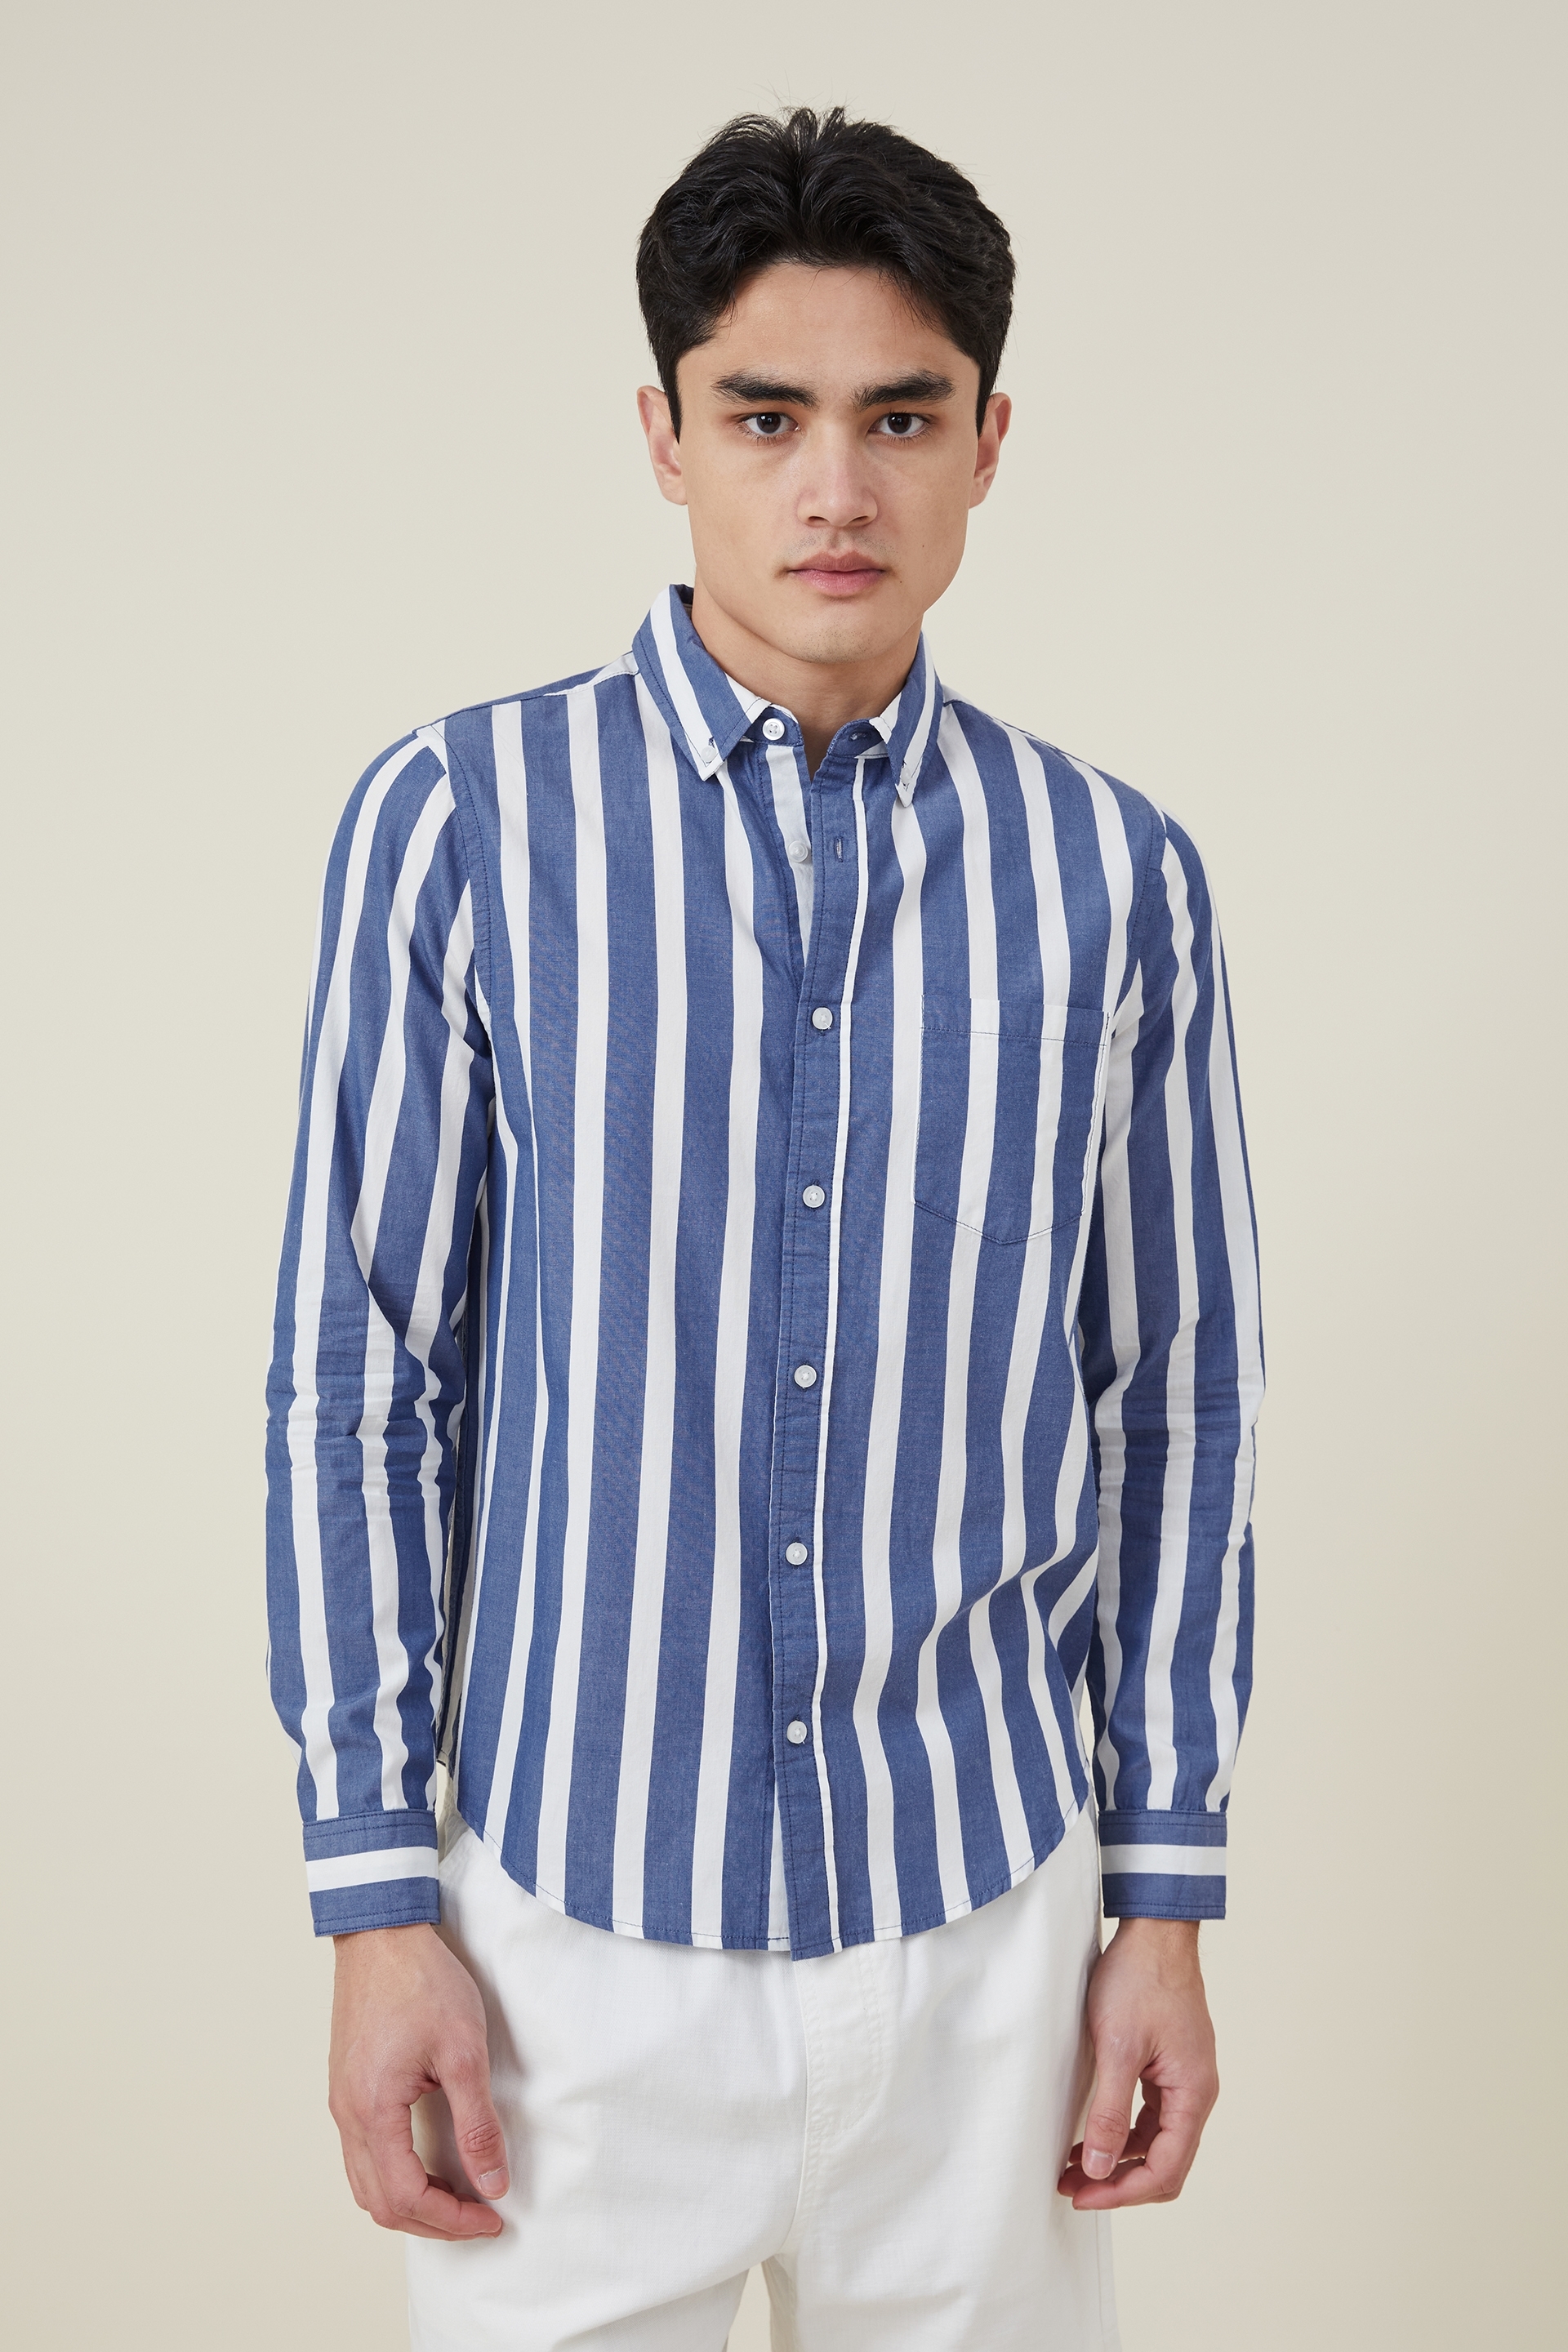 Cotton On Men - Mayfair Long Sleeve Shirt - Navy bold stripe